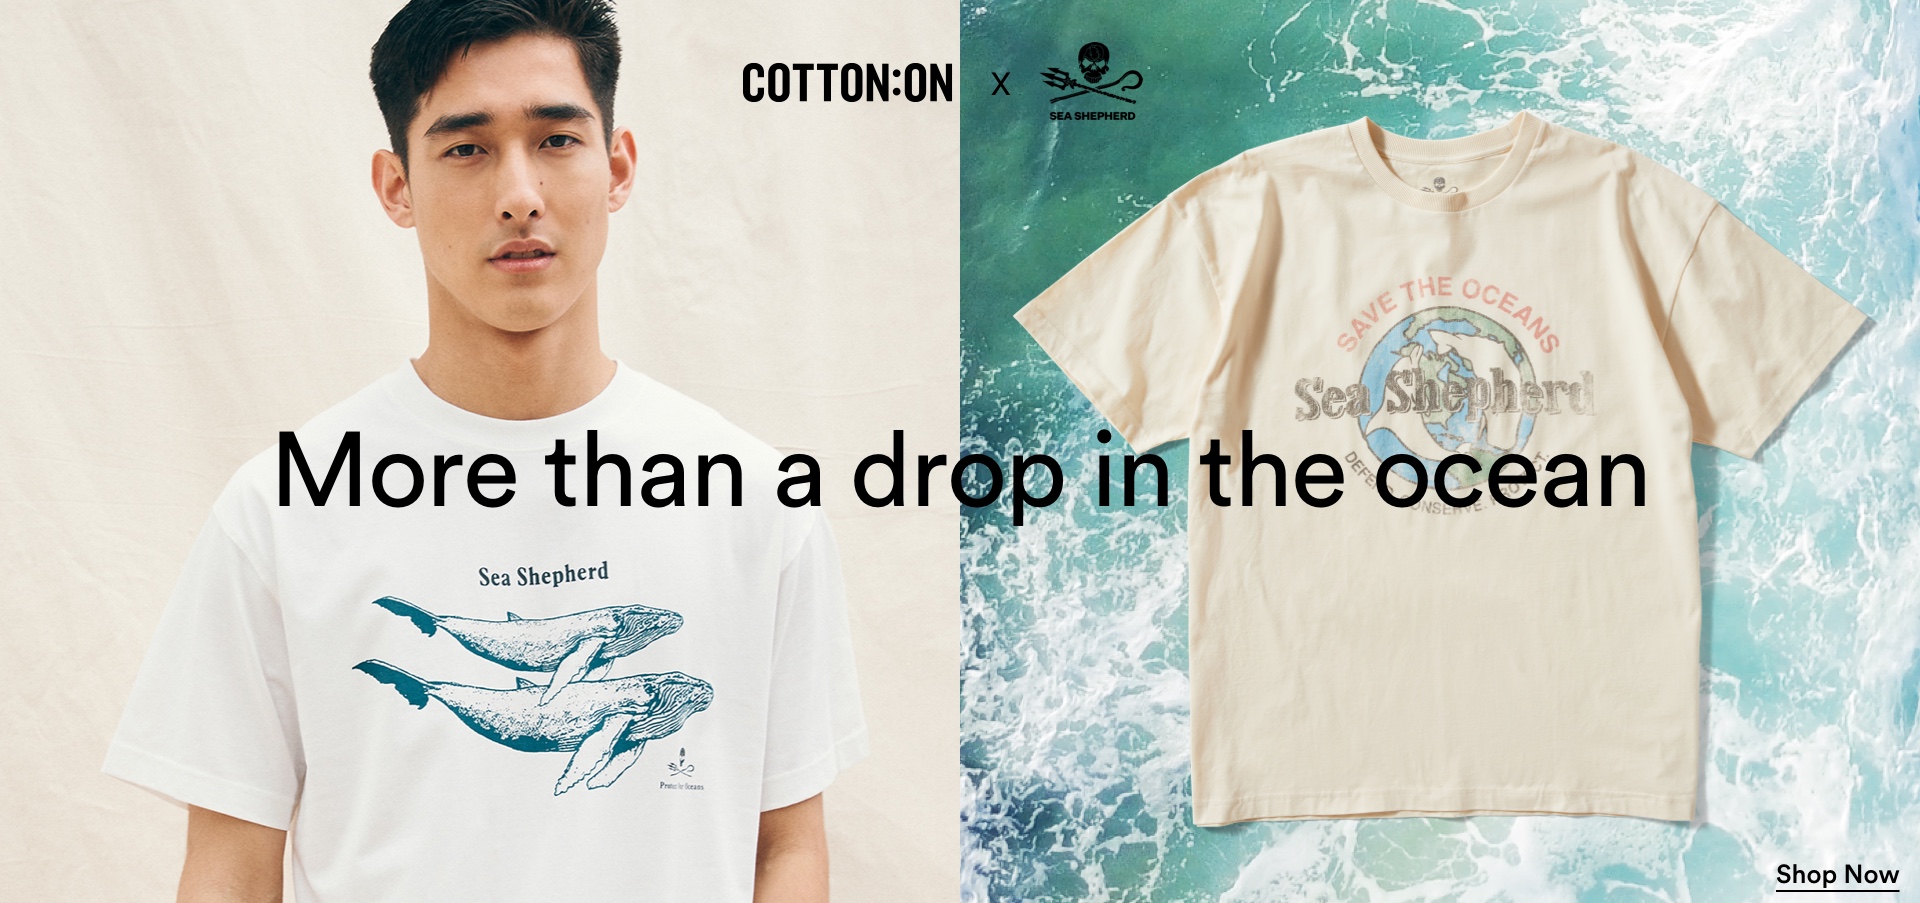 More than a drop in the ocean. Click to Shop Sea Shepherd.